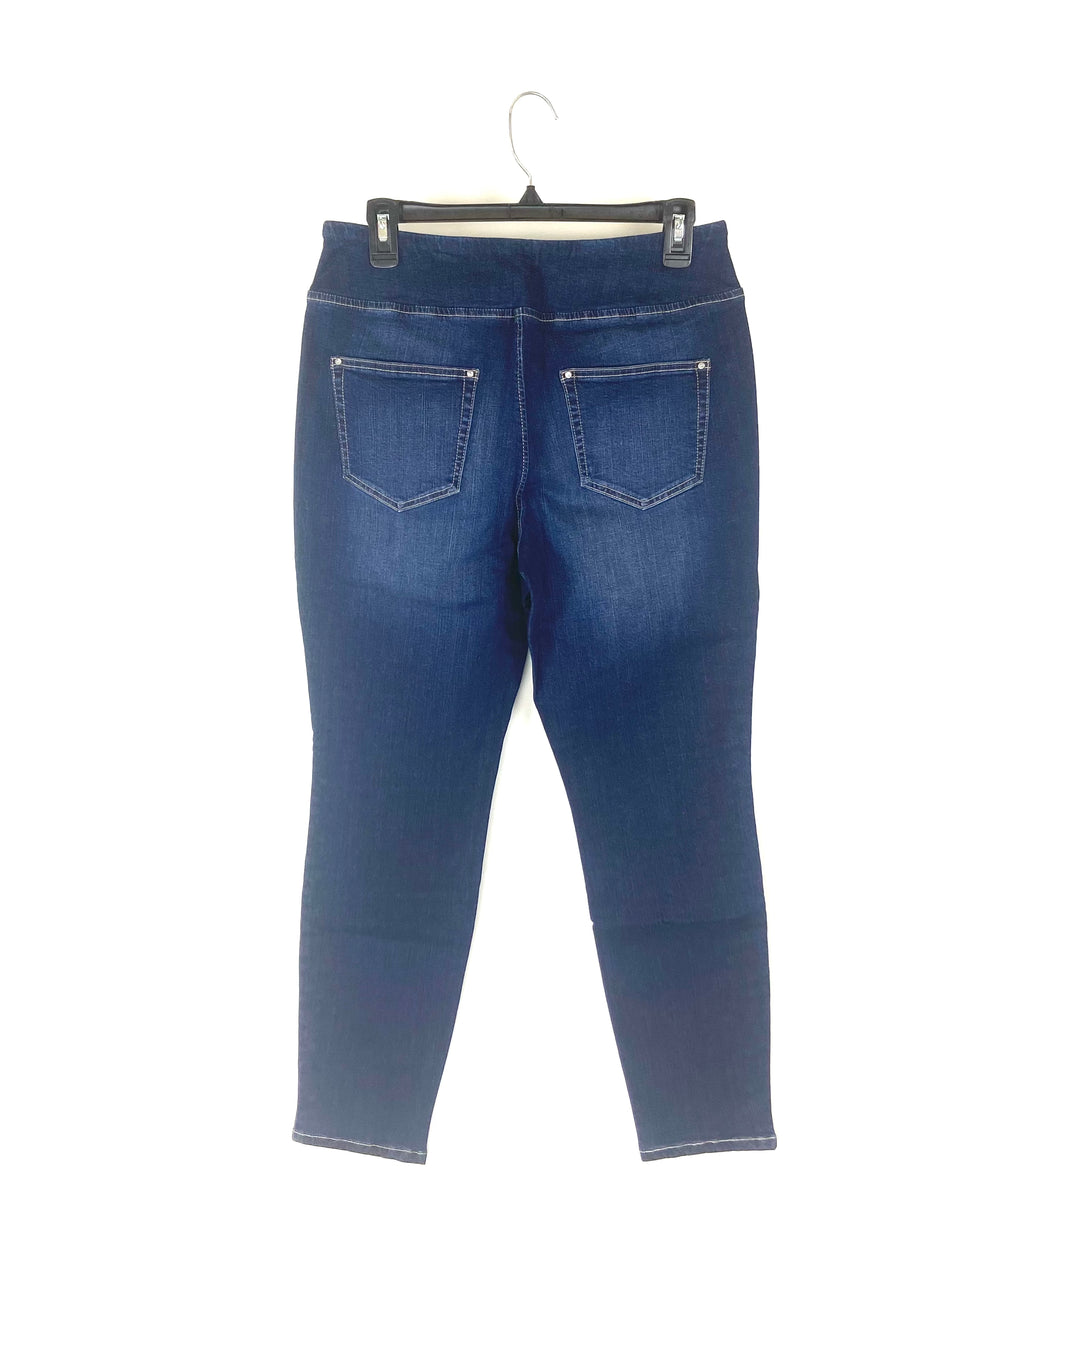 Side Pearl Dark Wash Jeans - Size 12/14